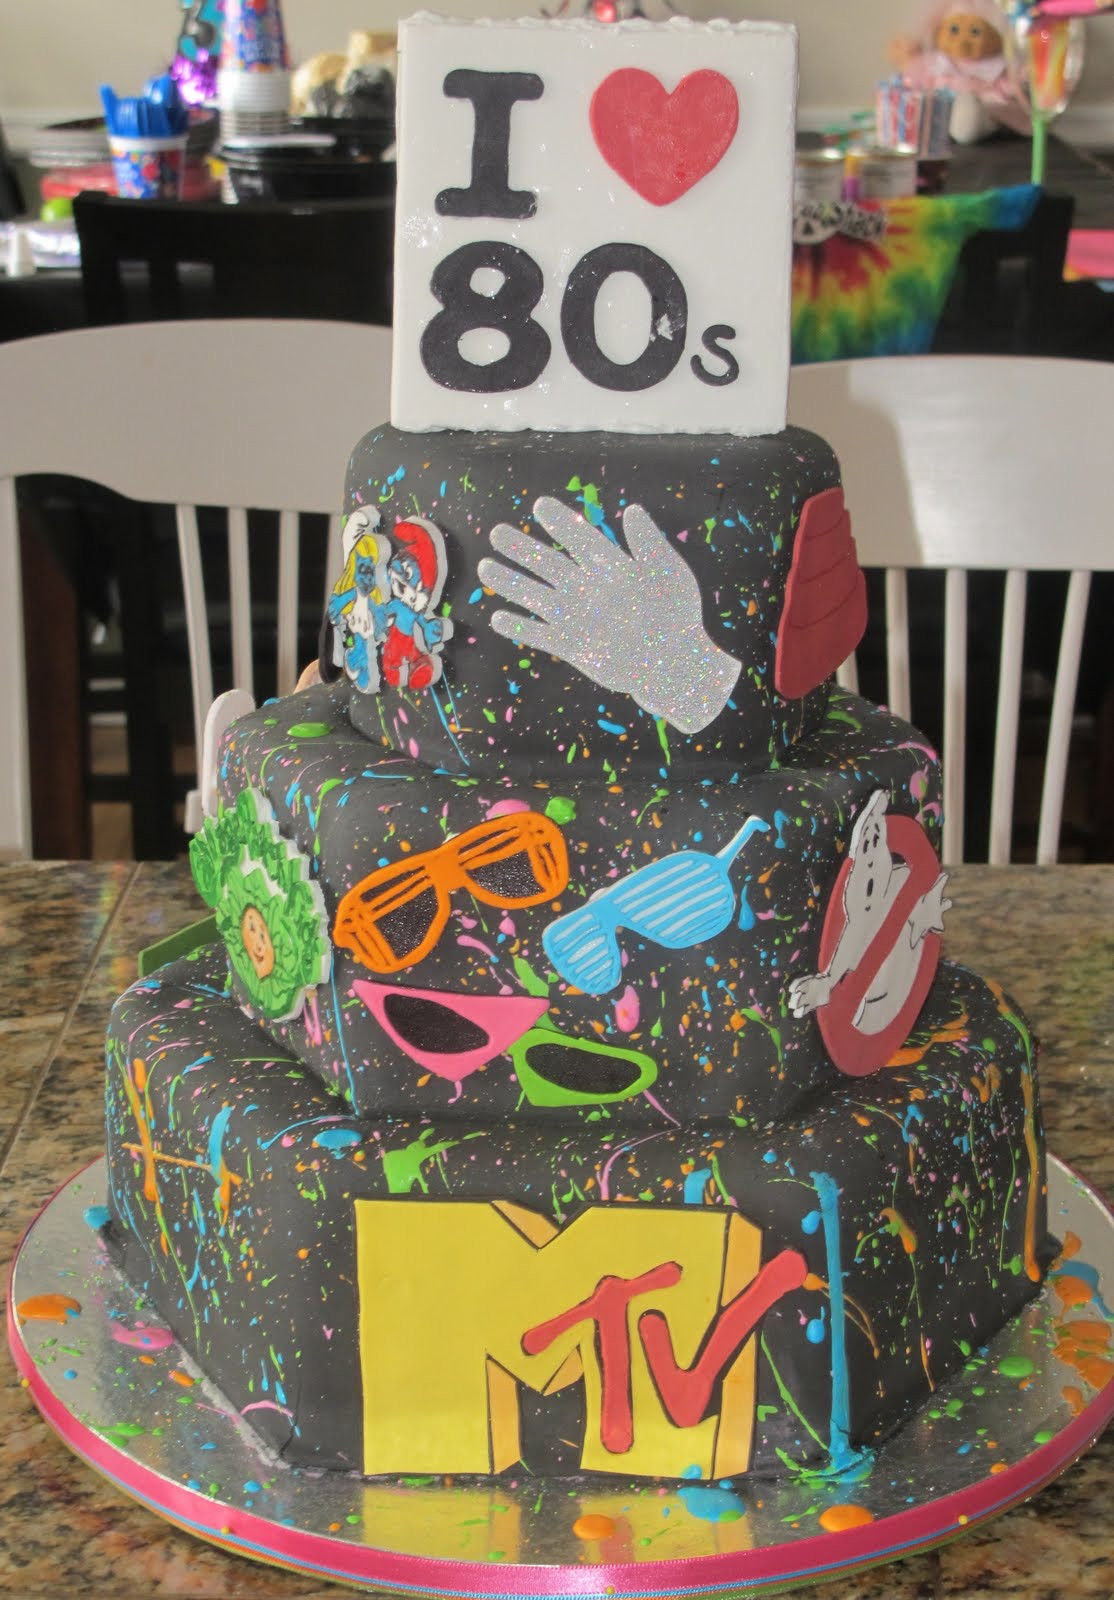 80s Birthday Cake
 J s Cakes I [Heart] 80s Cake